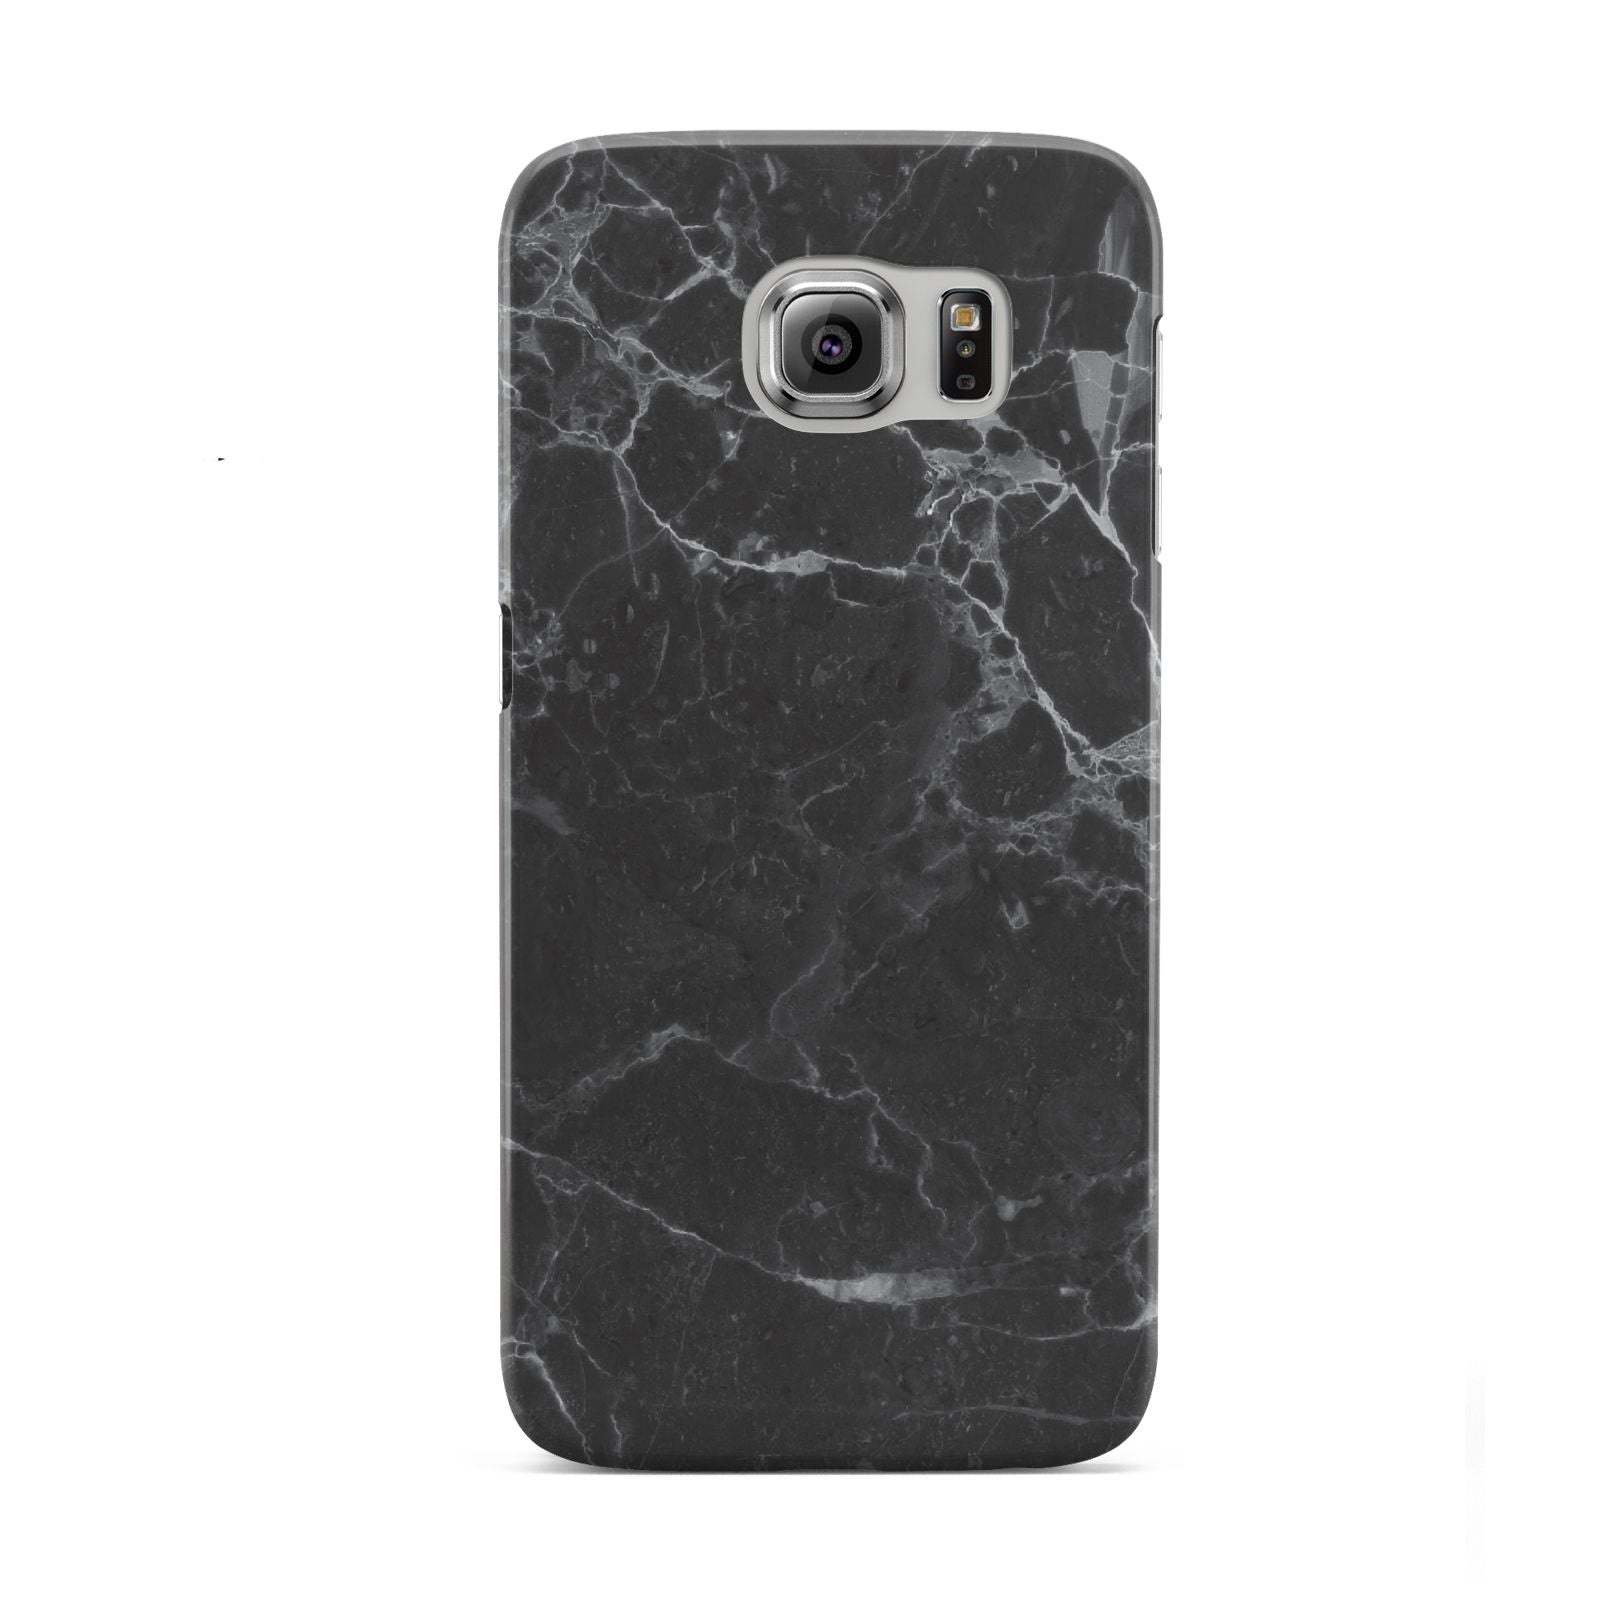 Faux Marble Effect Black Samsung Galaxy S6 Case